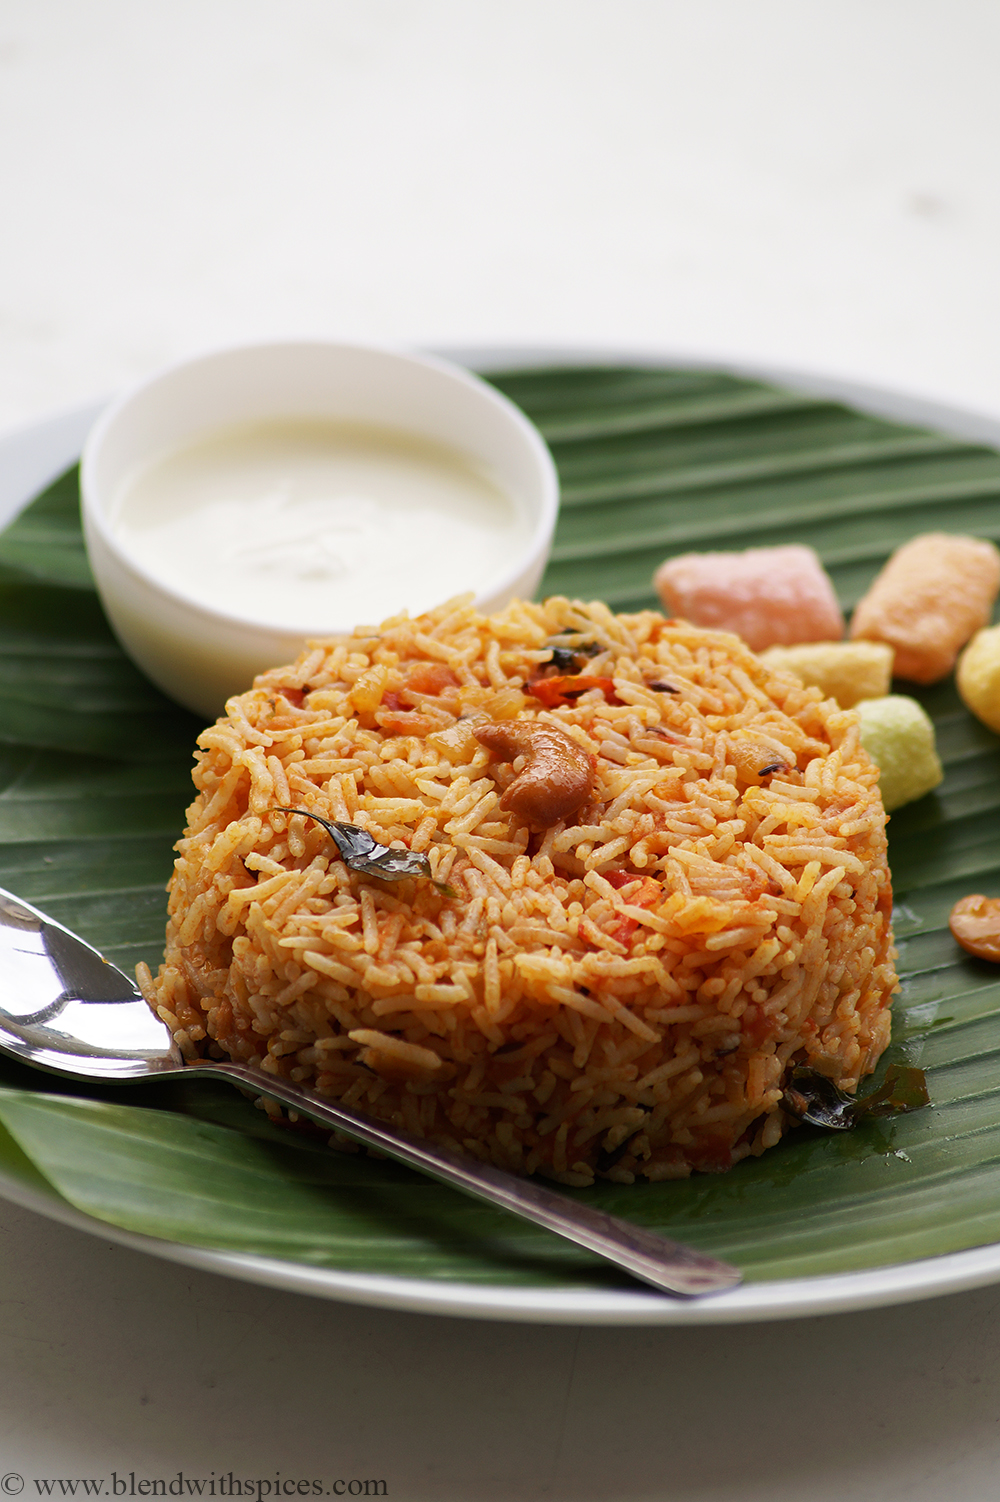 thakkali sadam recipe, tomato rice recipe south indian style, easy lunch box recipes